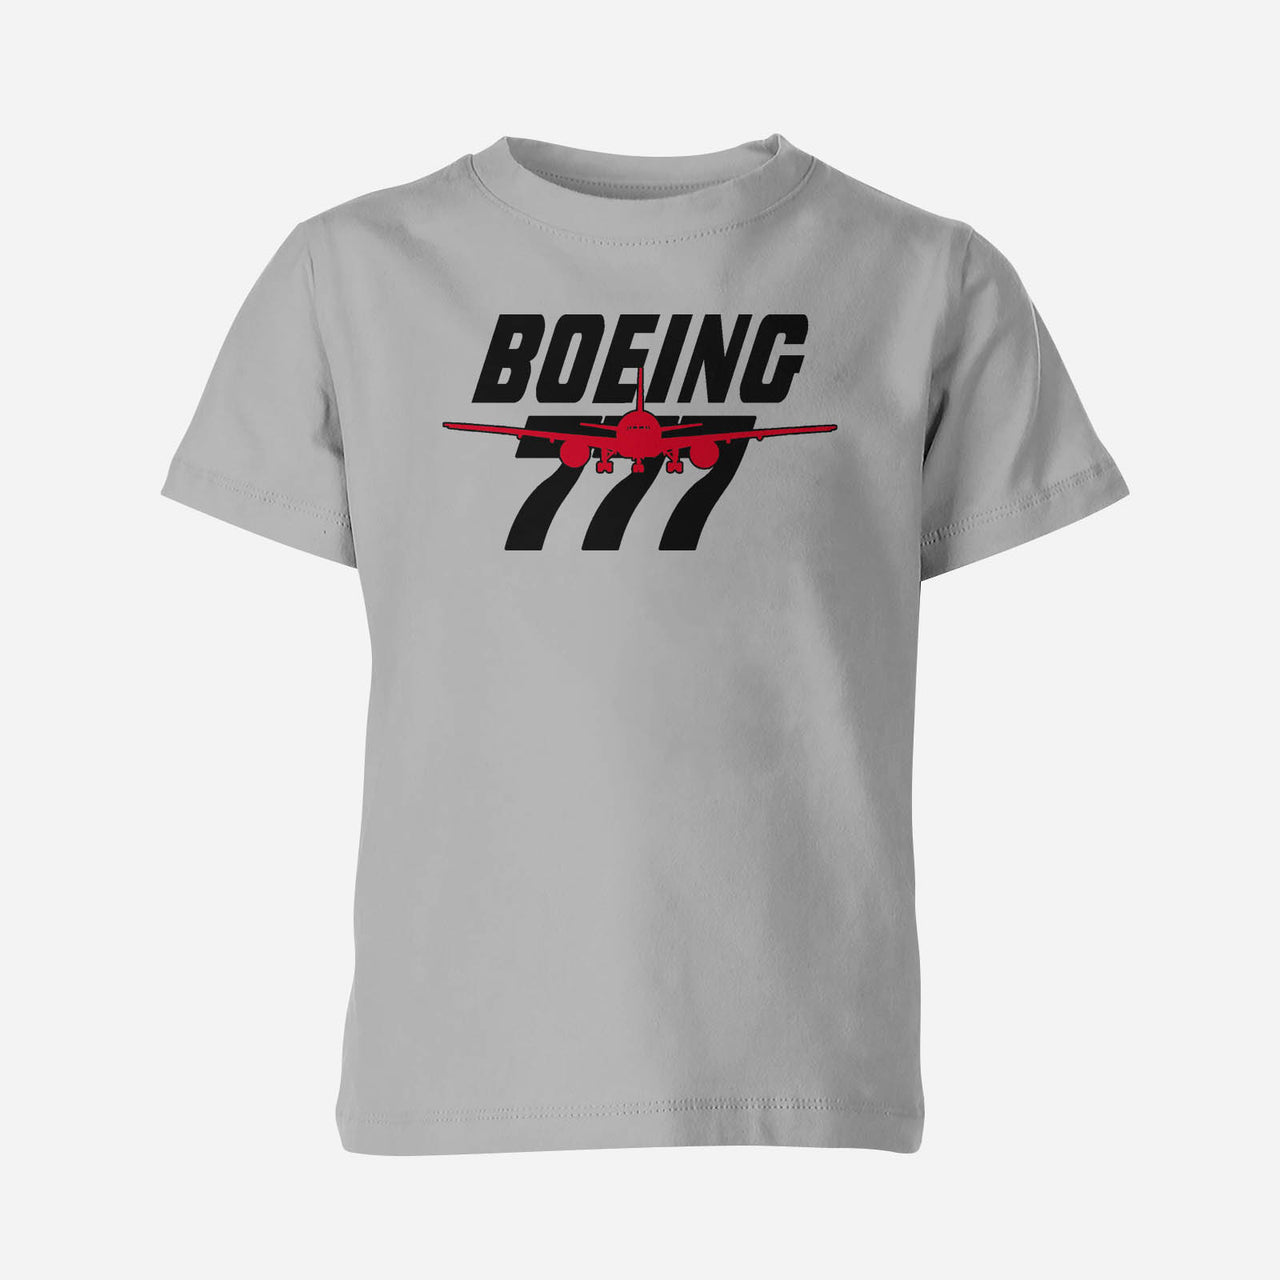 Amazing Boeing 777 Designed Children T-Shirts